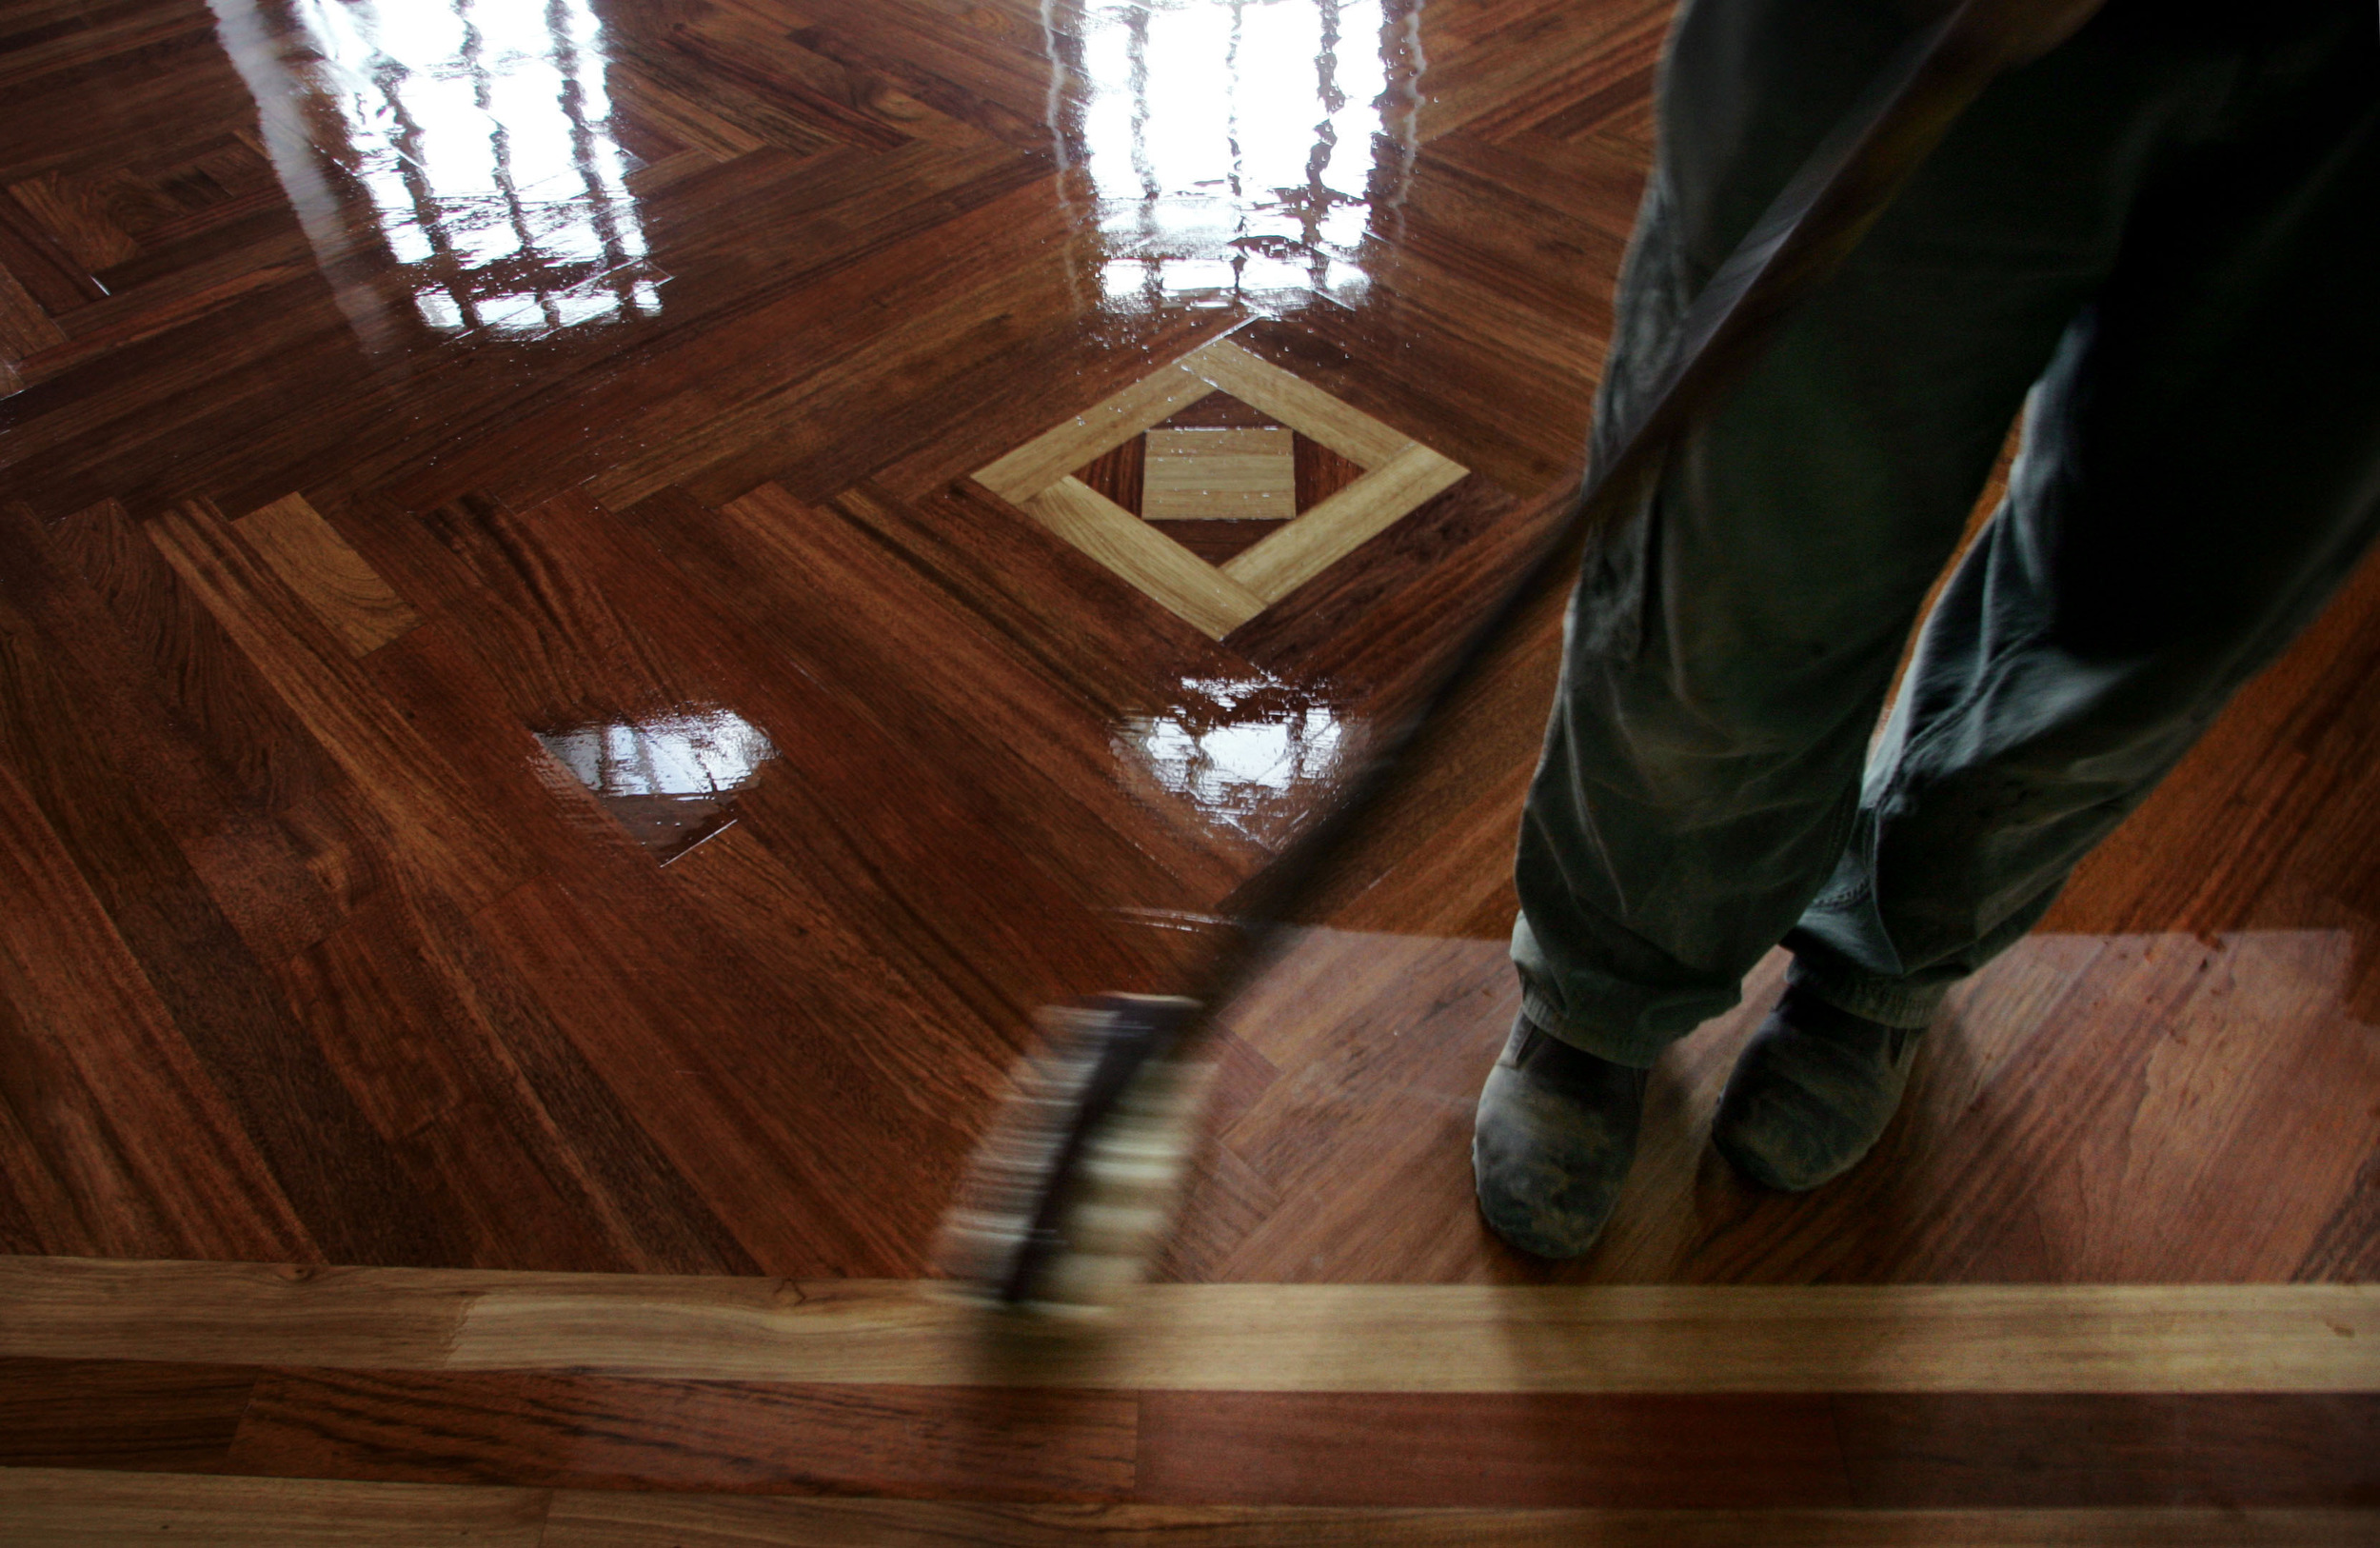  Mark Hollaway of Floor Works adds a final coat of polish onto the Brazilian cherry wood floors. 